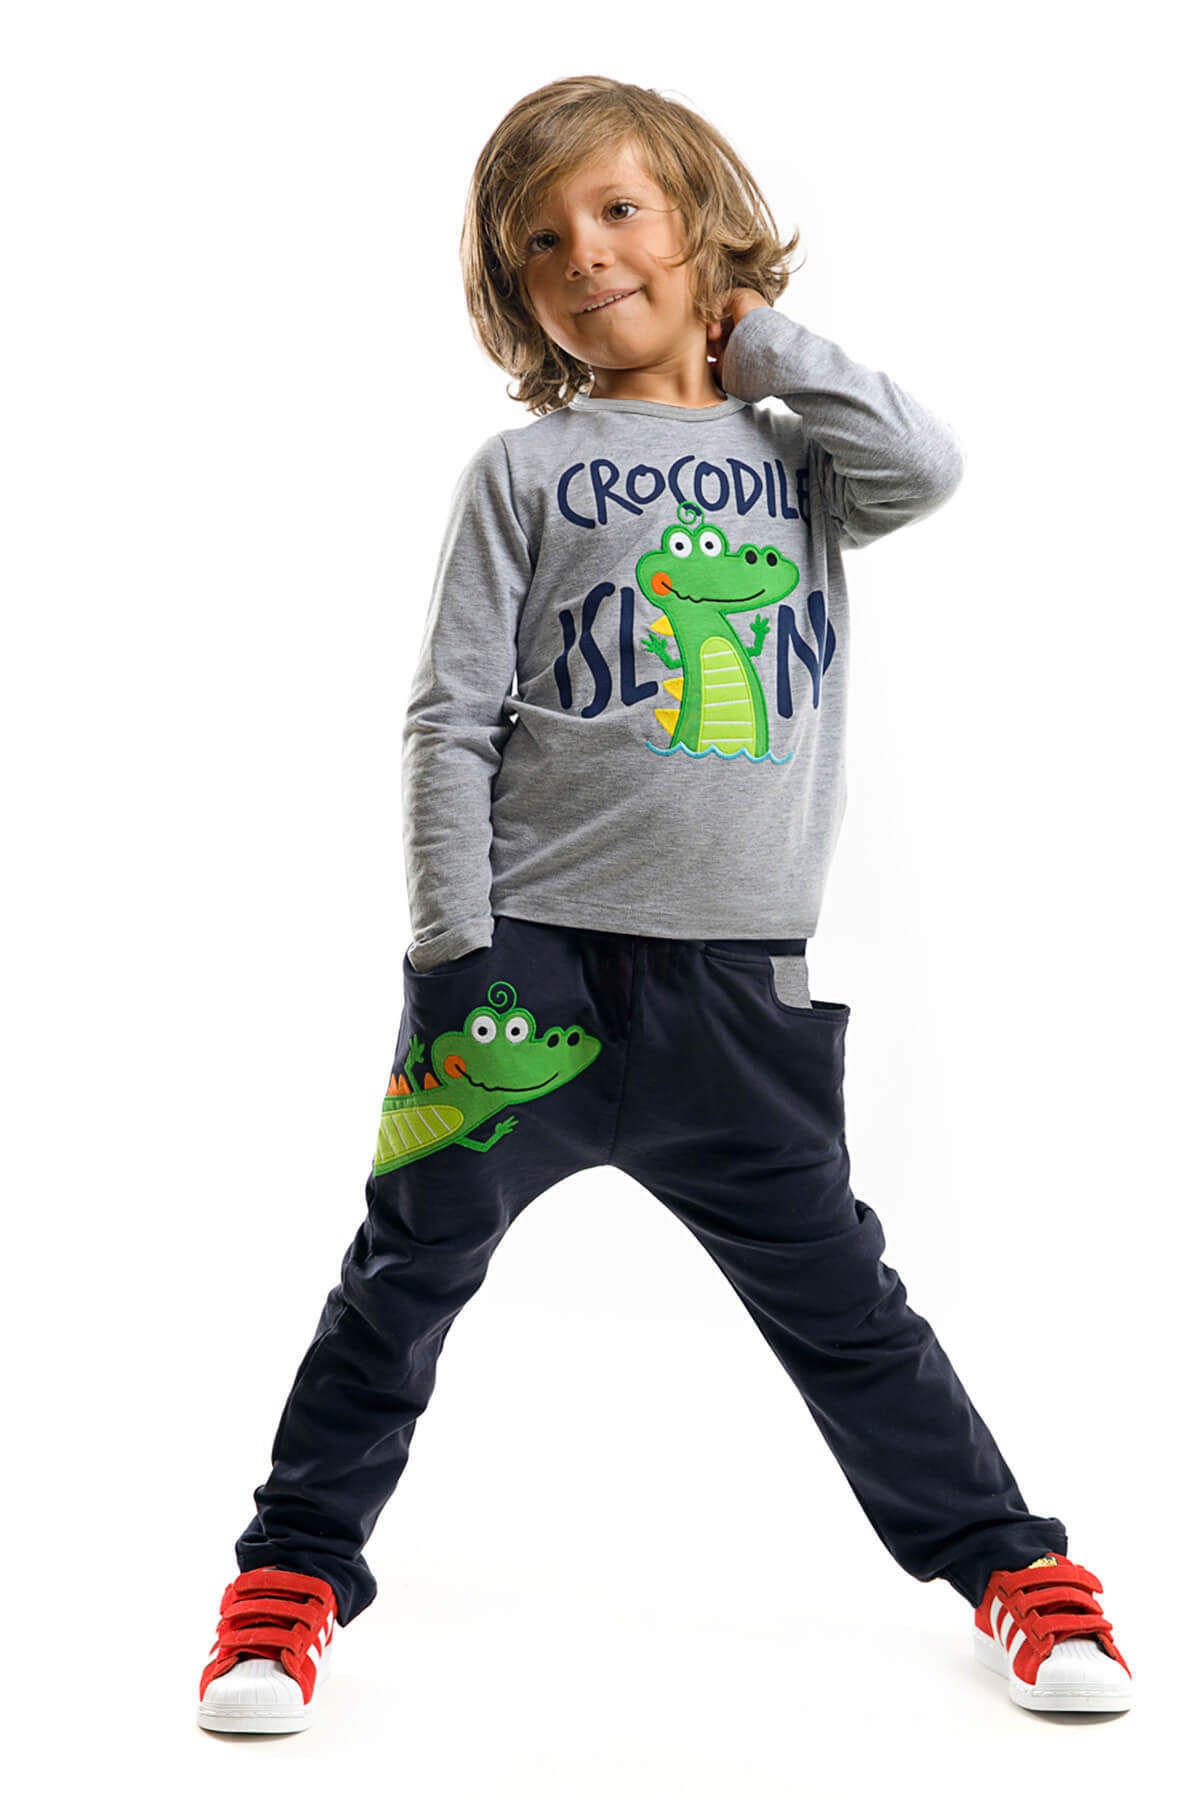 Denokids Crocodile Island Boy's T-shirt Trousers Set